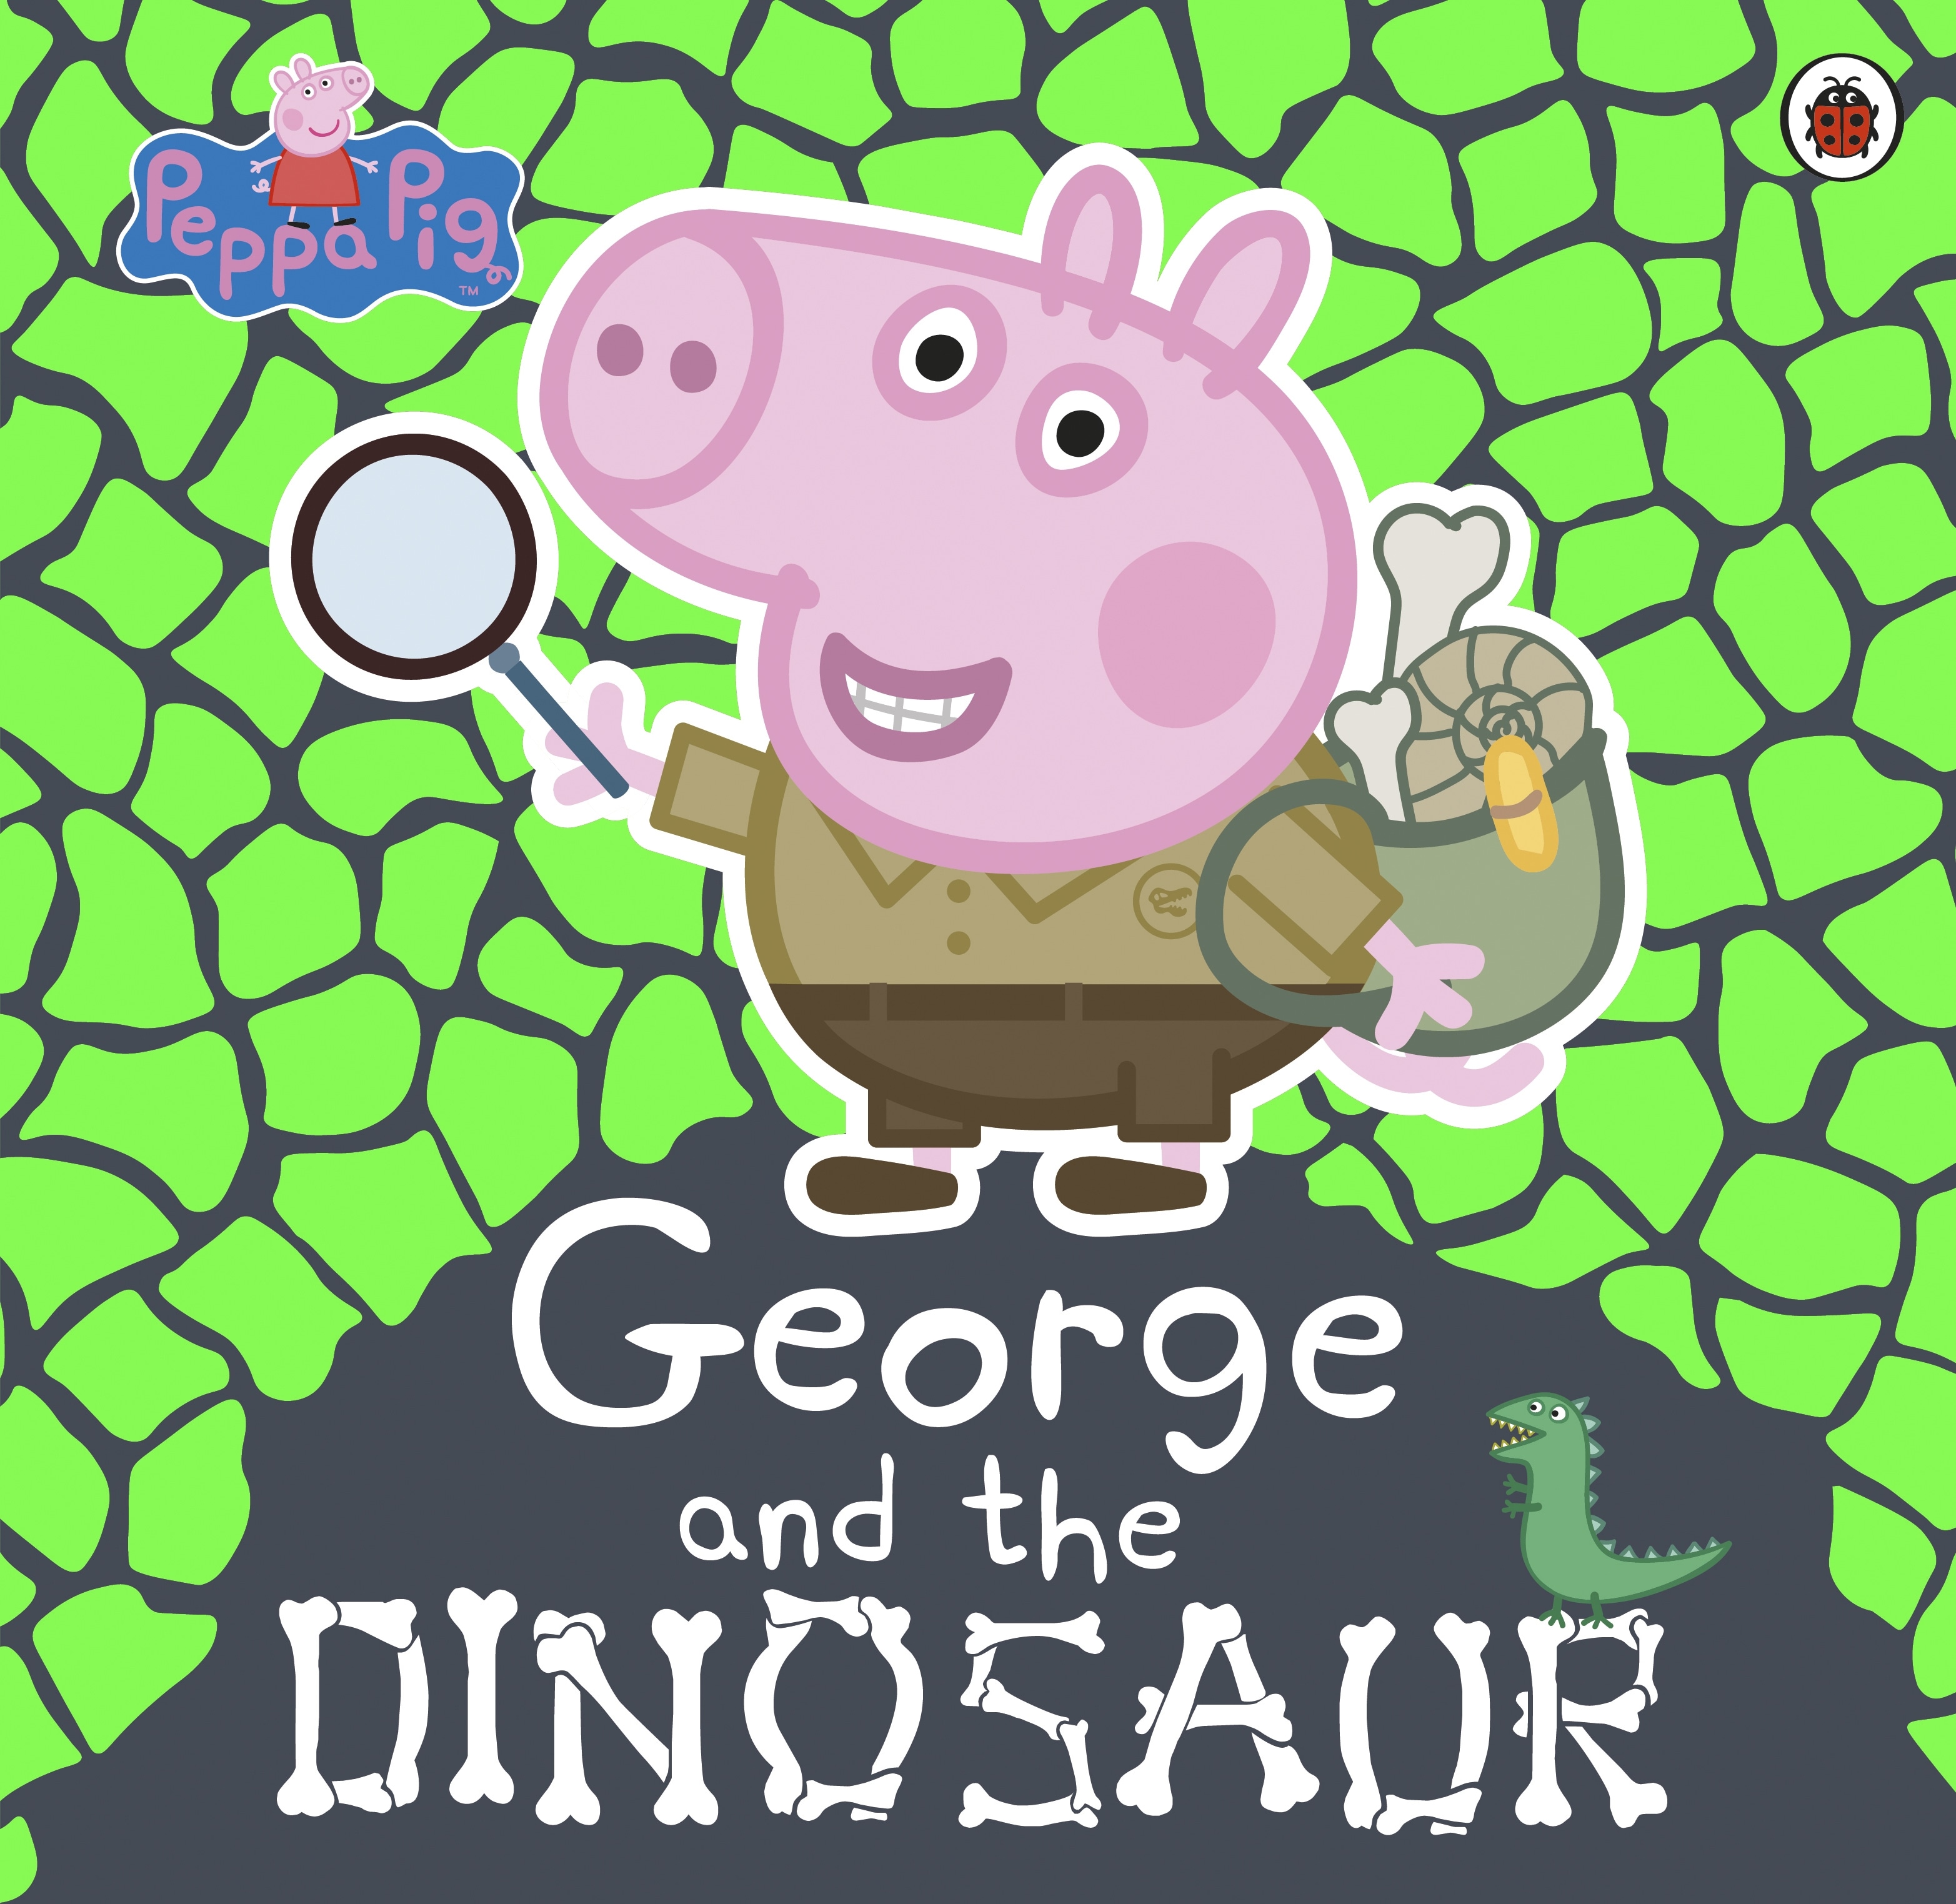 Book “Peppa Pig: George and the Dinosaur” by Peppa Pig — December 26, 2019